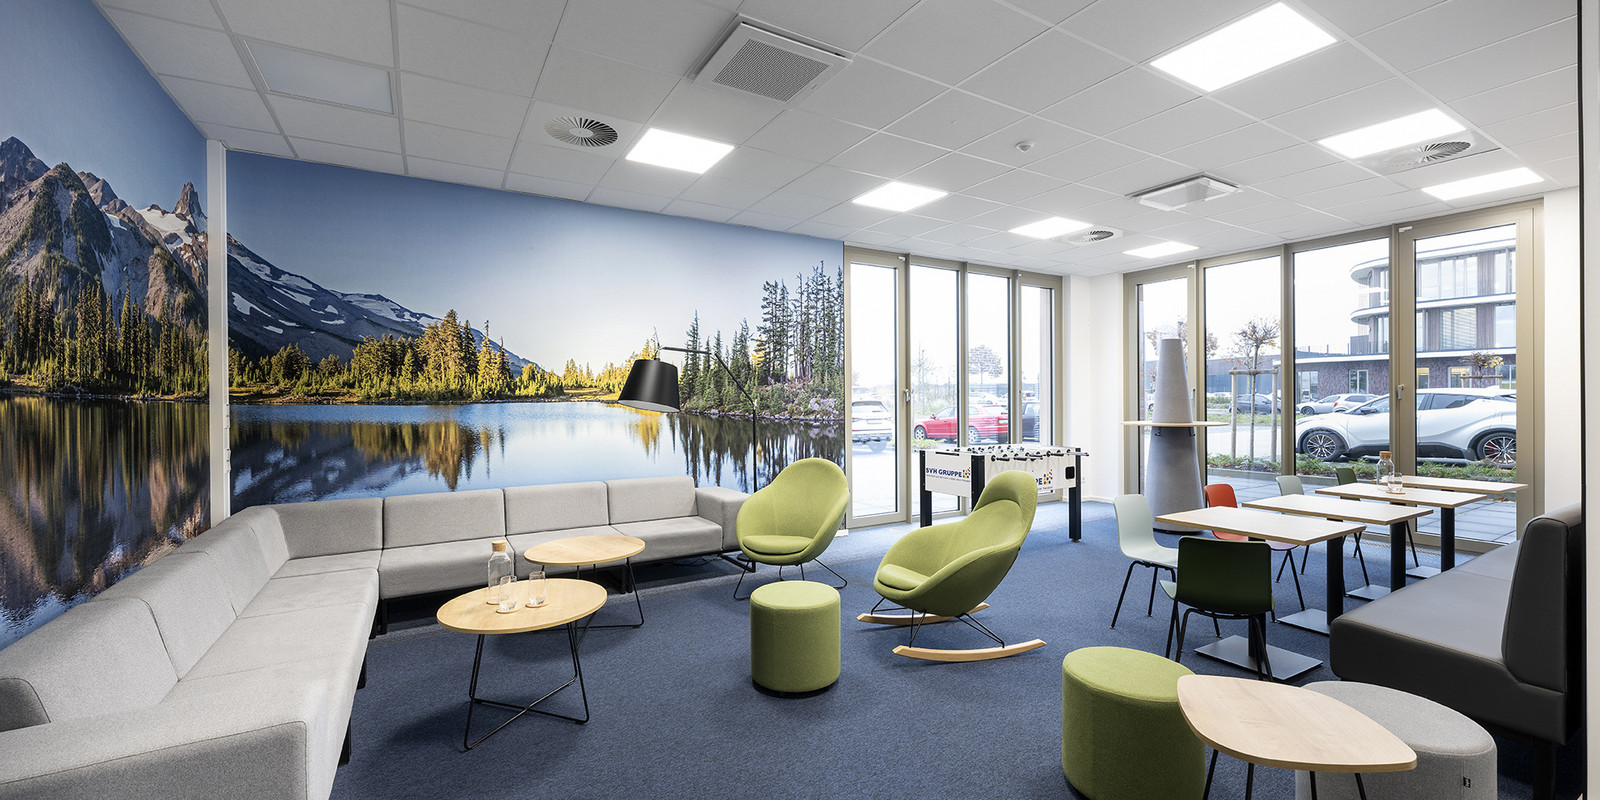 Innovative Umgestaltung: SVH Handels-GmbH gestaltet Arbeitsumgebung mit pro office Mönchengladbach neu Bild 0